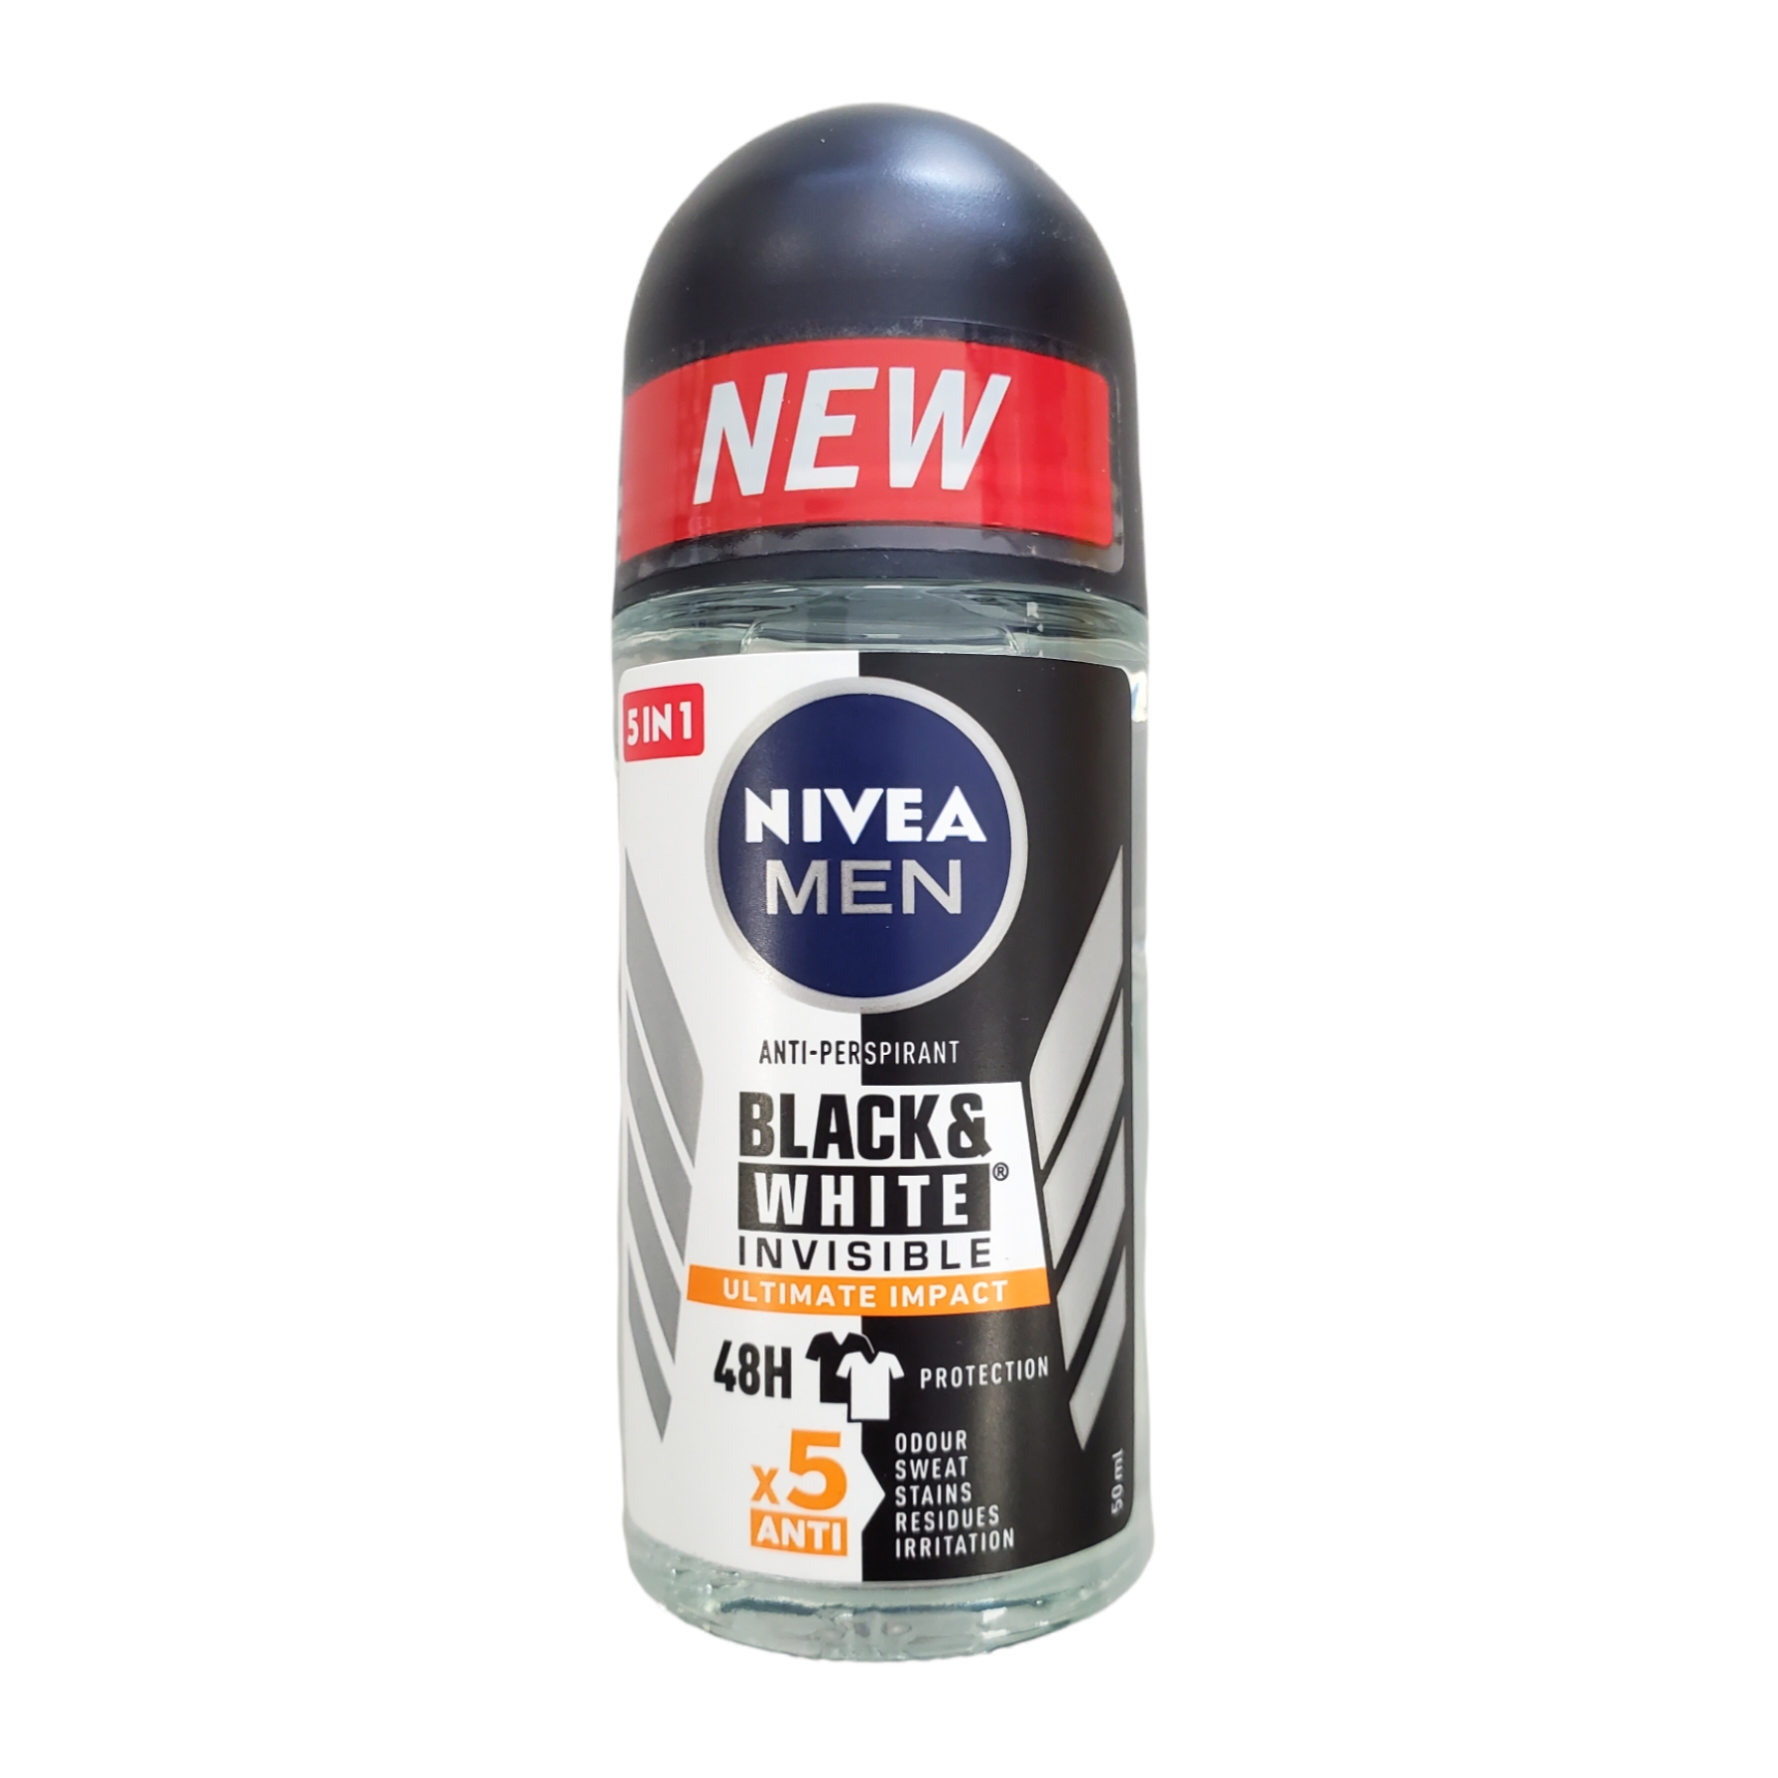 Nivea MEN Black & White ultimate Impact anti-perspirant